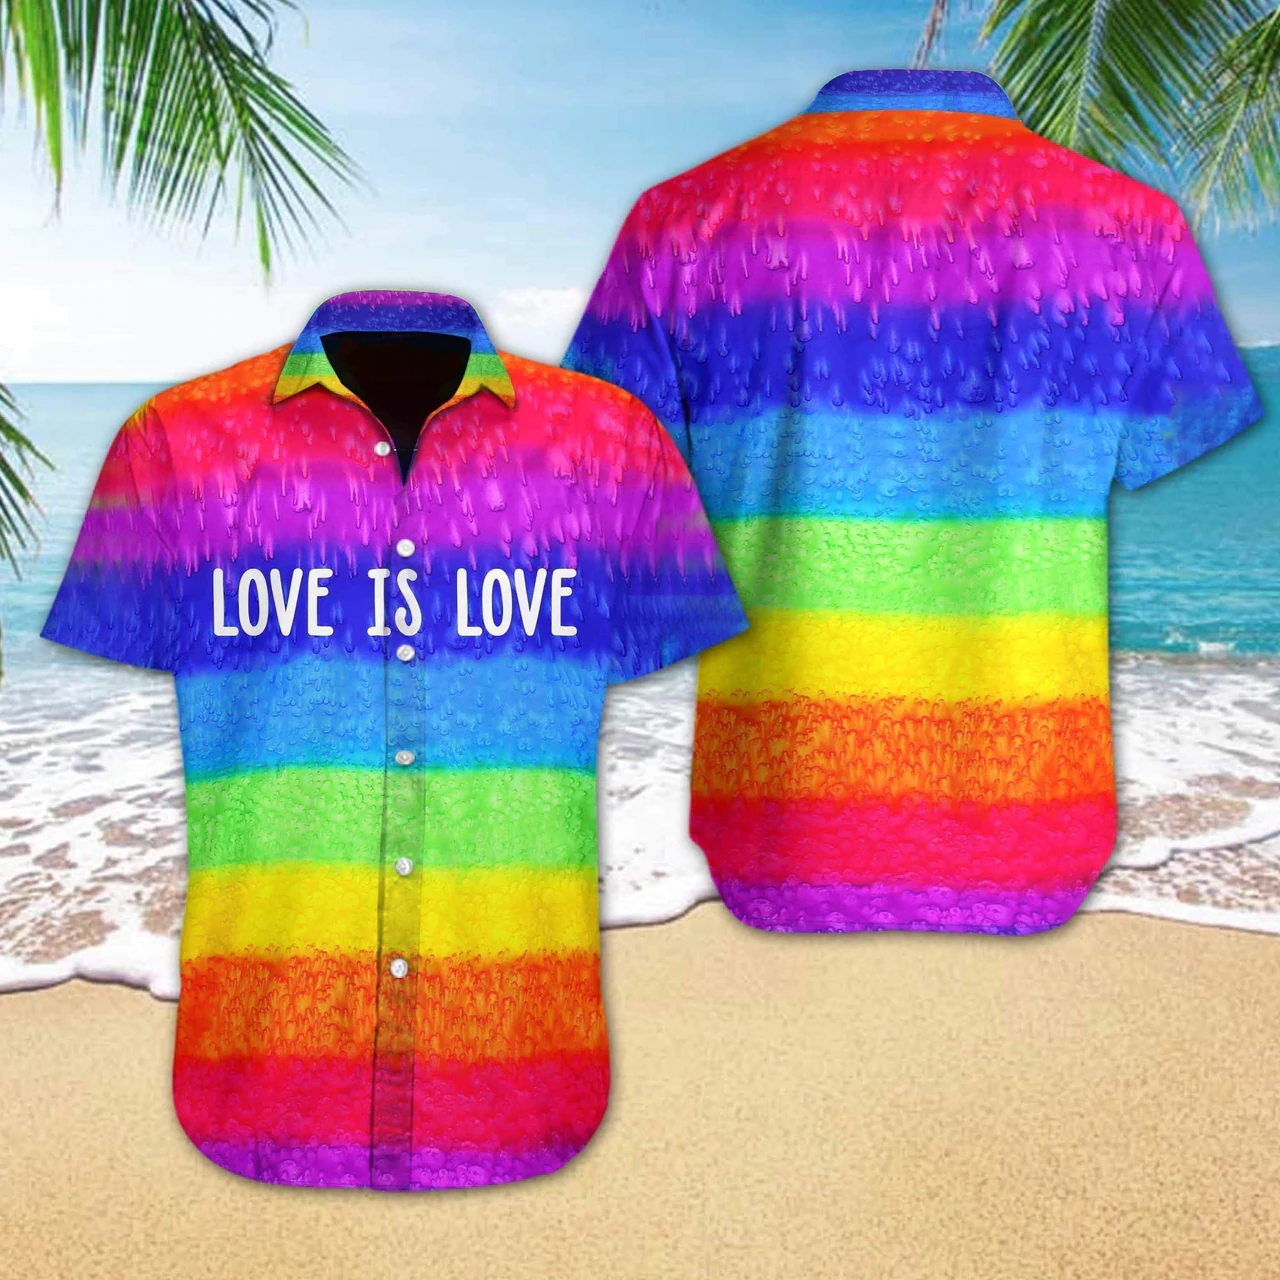 Love is love LGBT Aloha Hawaiian Shirts For Summer/ Pride Colorful Rainbow LGBT Hawaiian Shirts/ Gift For Couple Gaymer And Lesbian